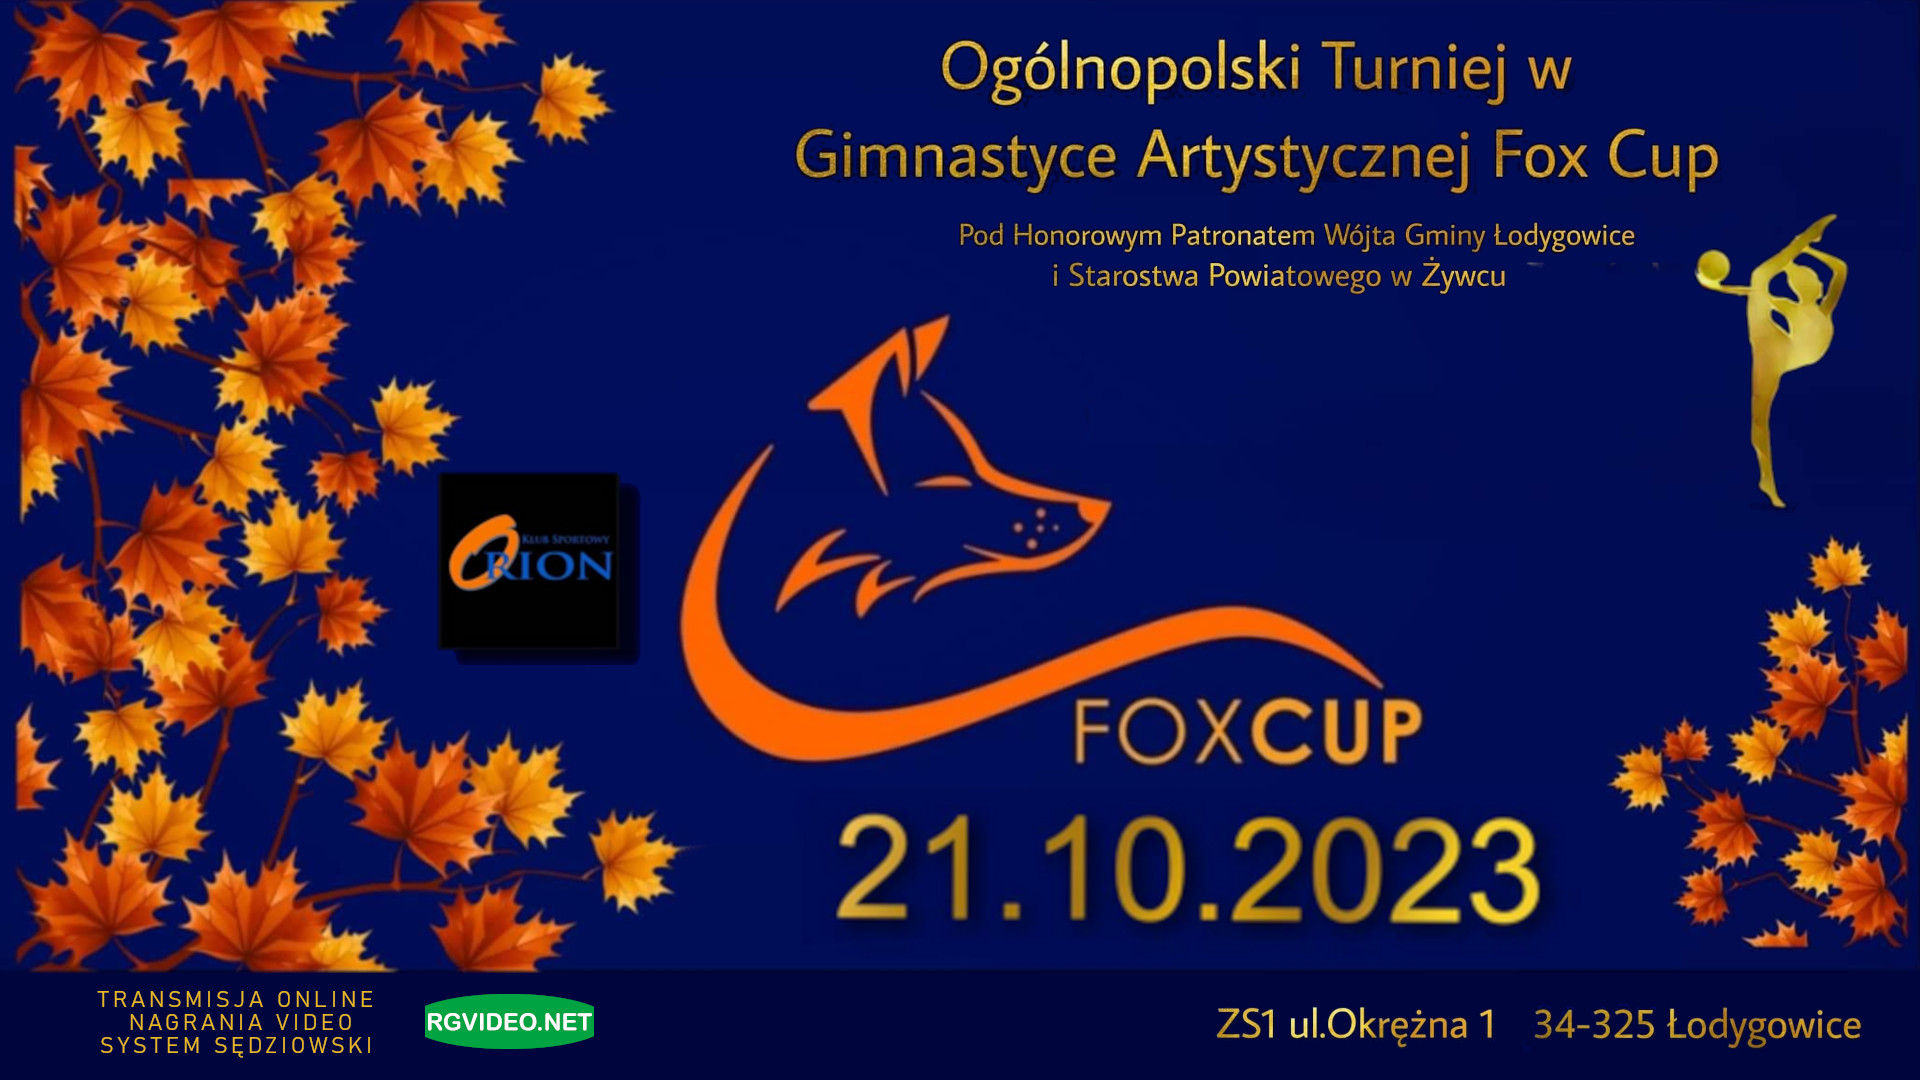 VIDEO - FOX CUP 2023